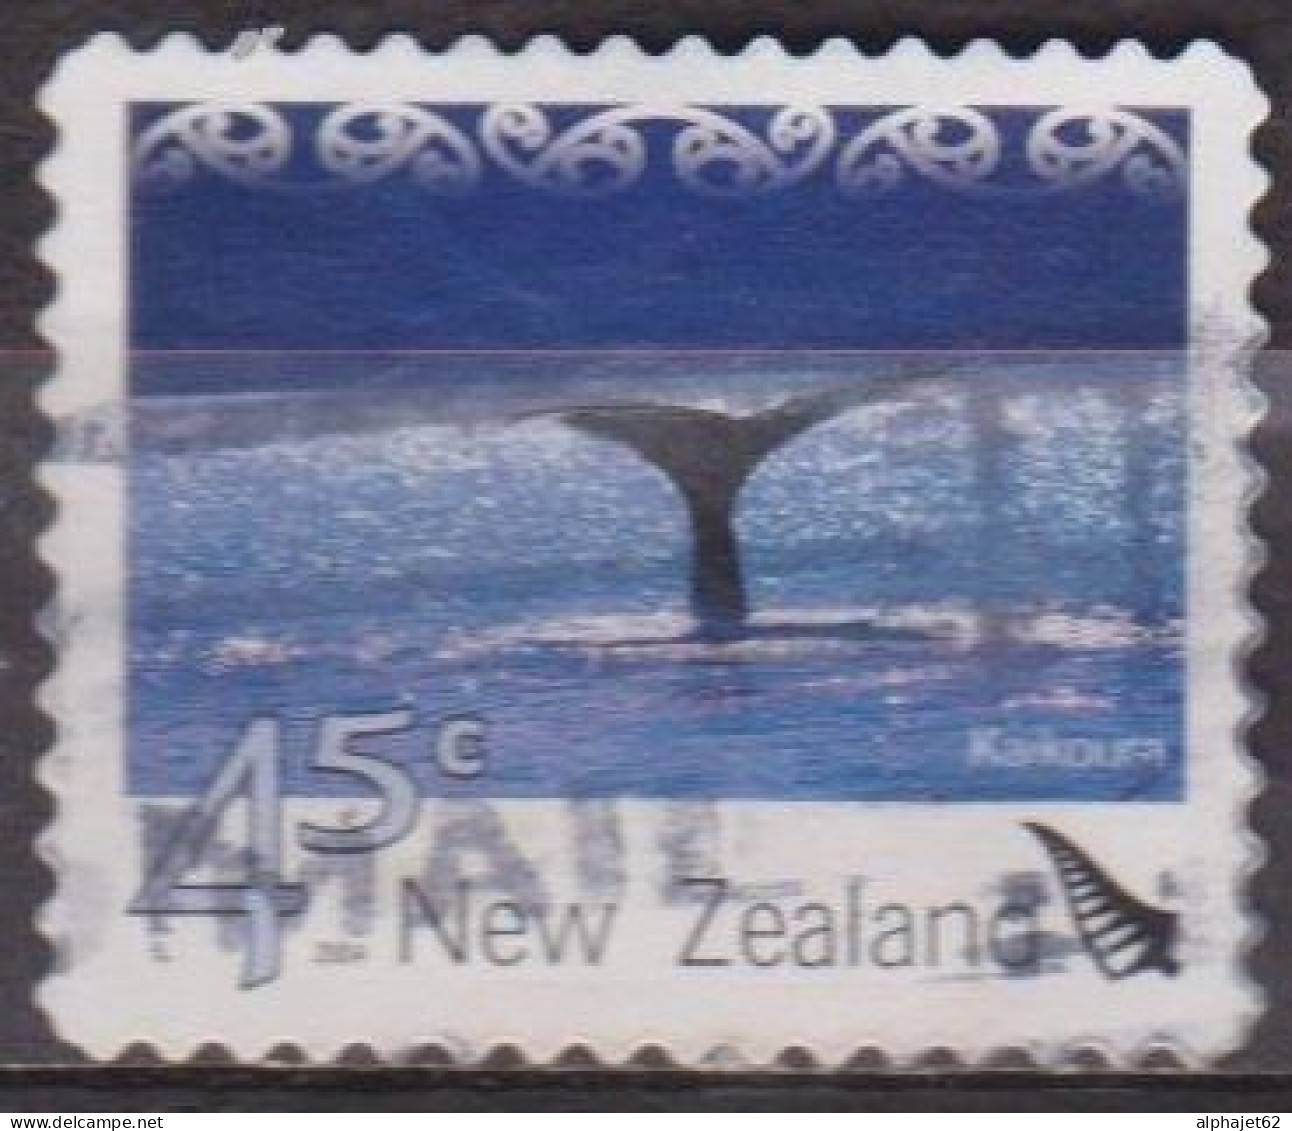 Kalkoura - NOUVELLE ZELANDE - Paysage Cotier Avec Queue De Baleine - N° 2074 - 2004 - Used Stamps